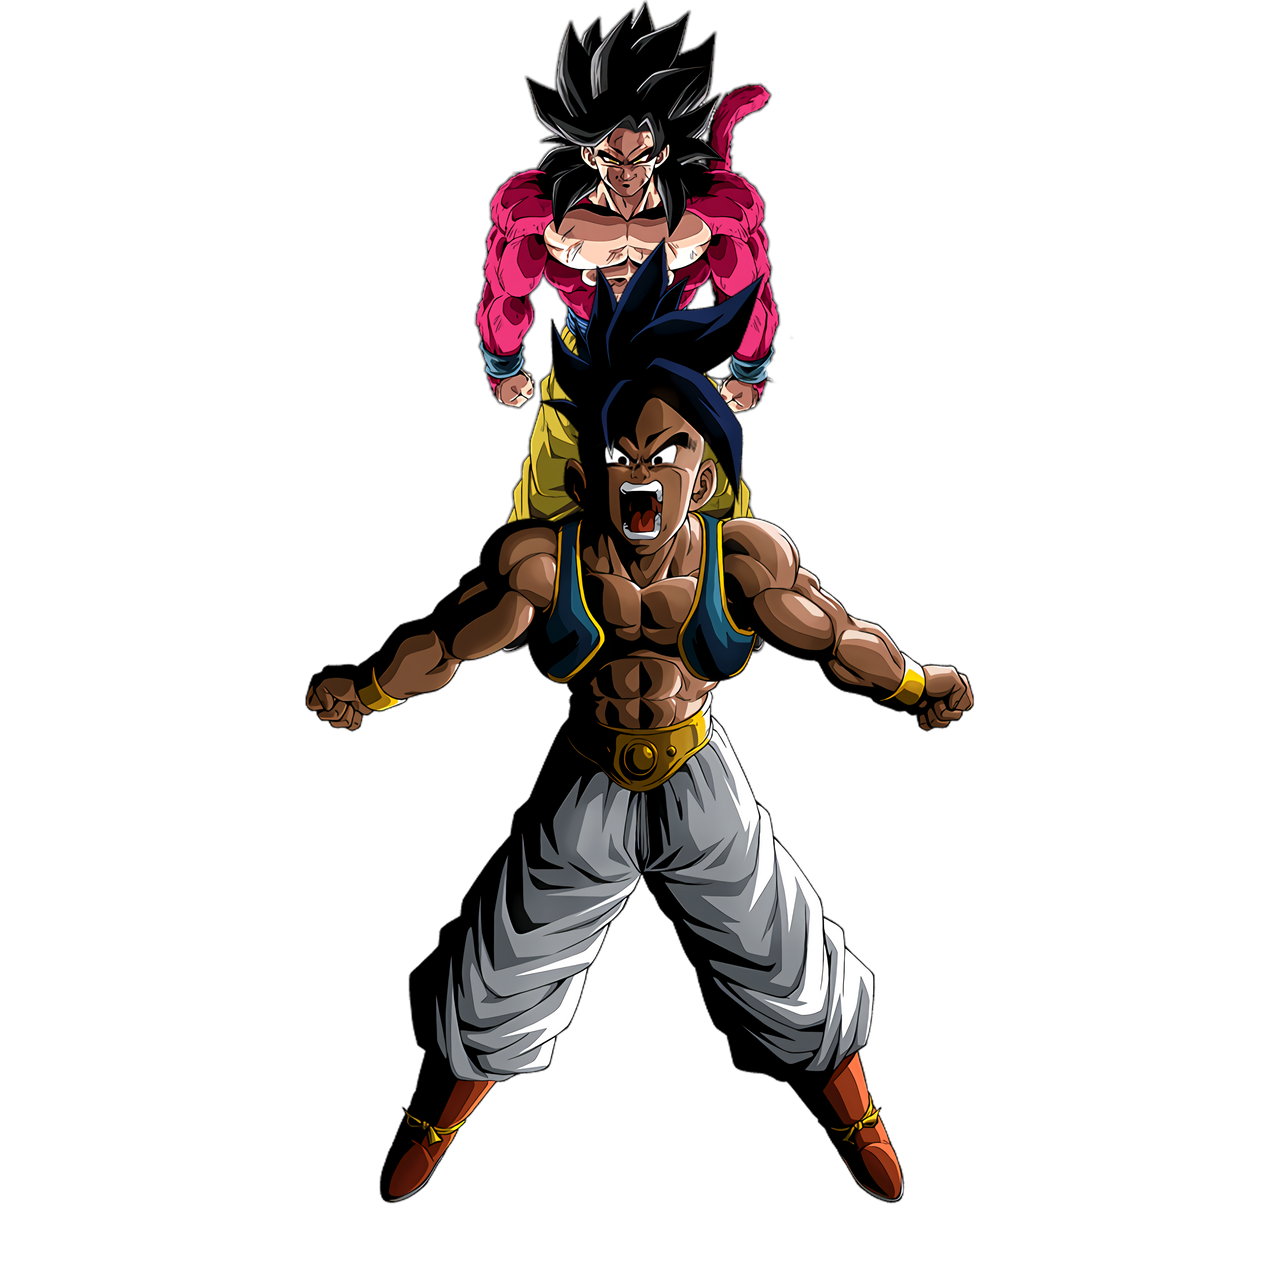 4K INT DF LR Majuub and Super Saiyan 4 Goku by GachaRobin on